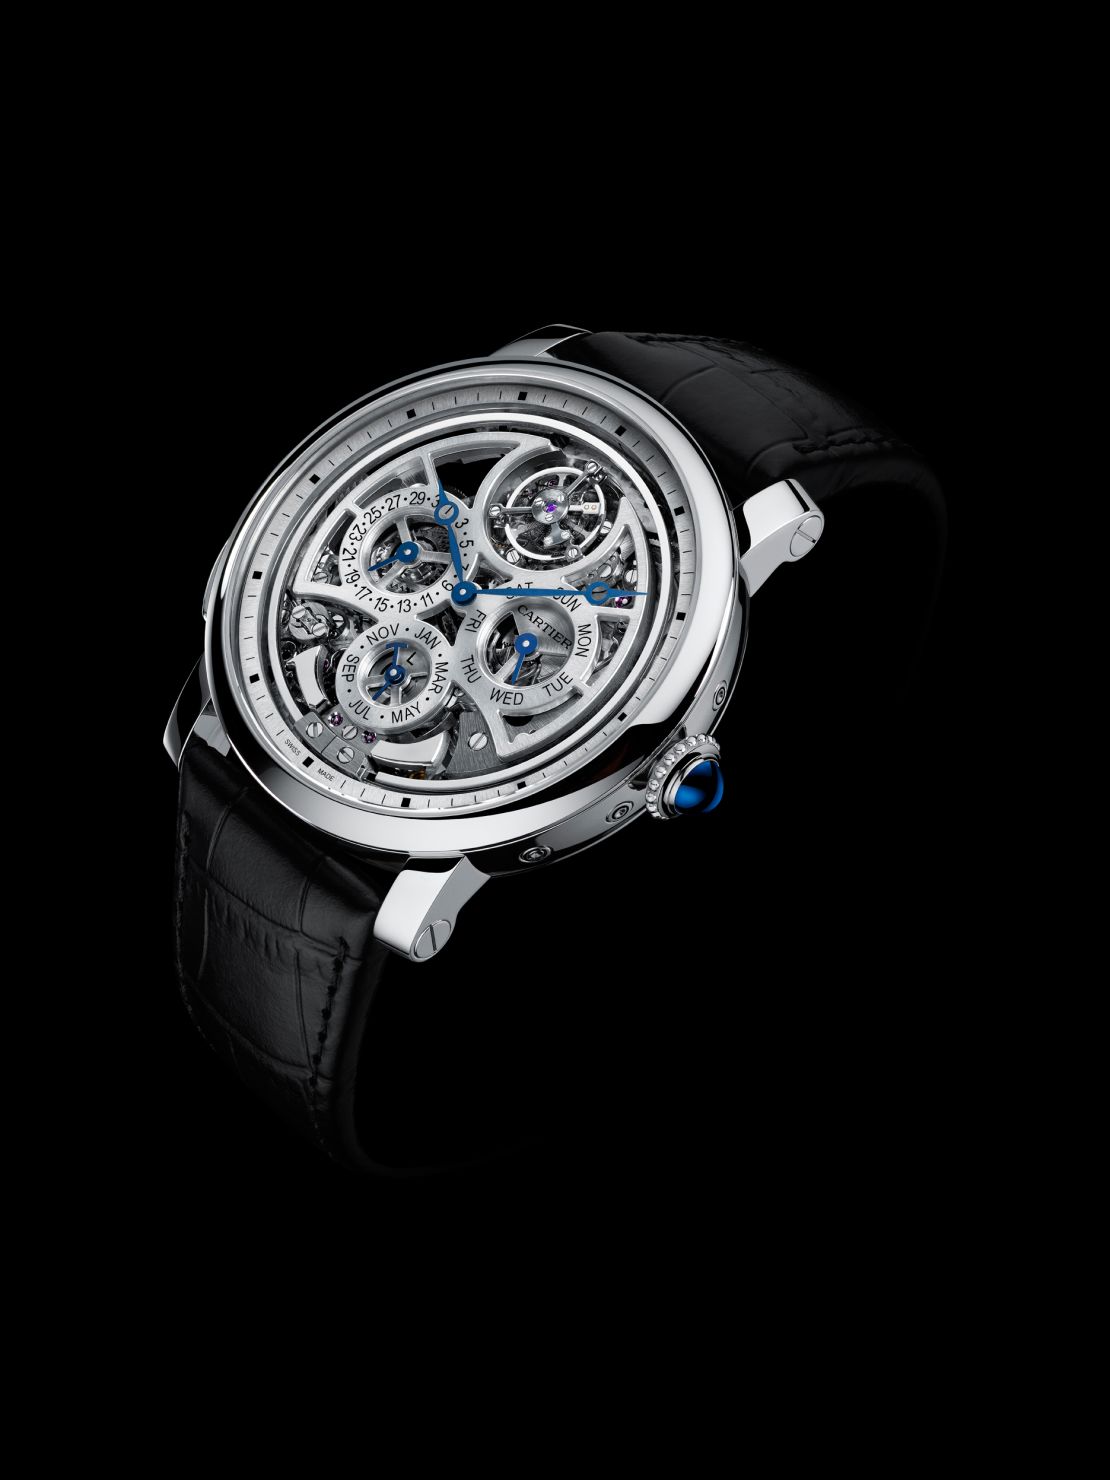 The Rotonde de Cartier Grande Complication watch, Cartier's most complex watch to date.